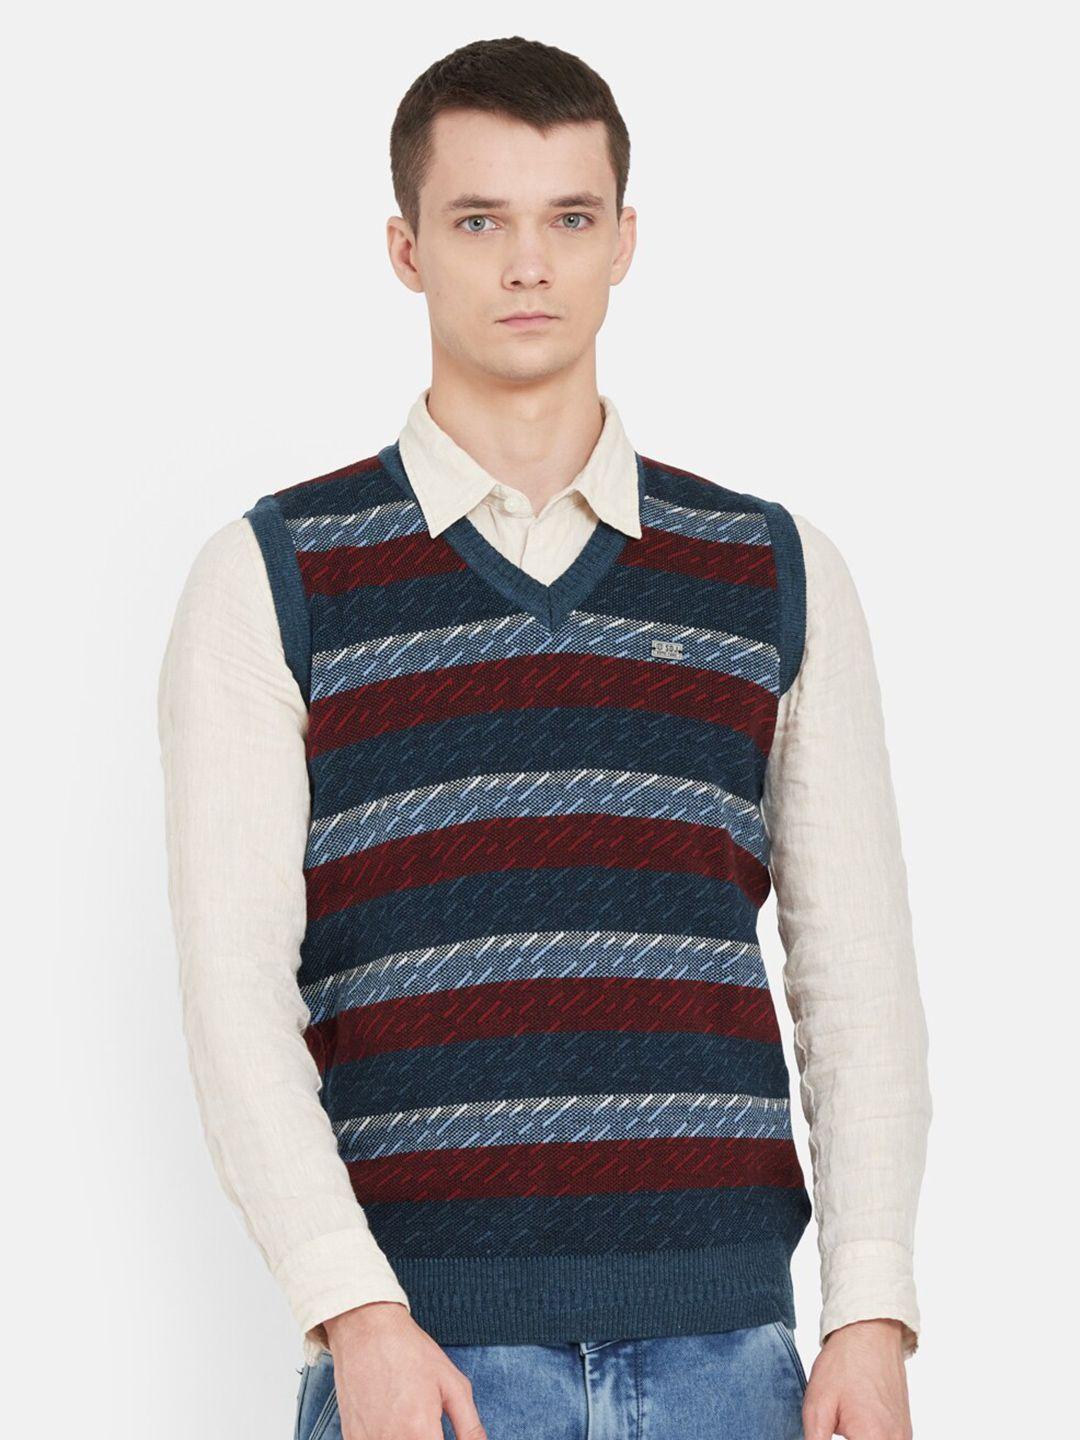 duke-men-teal-&-red-striped-sweater-vest